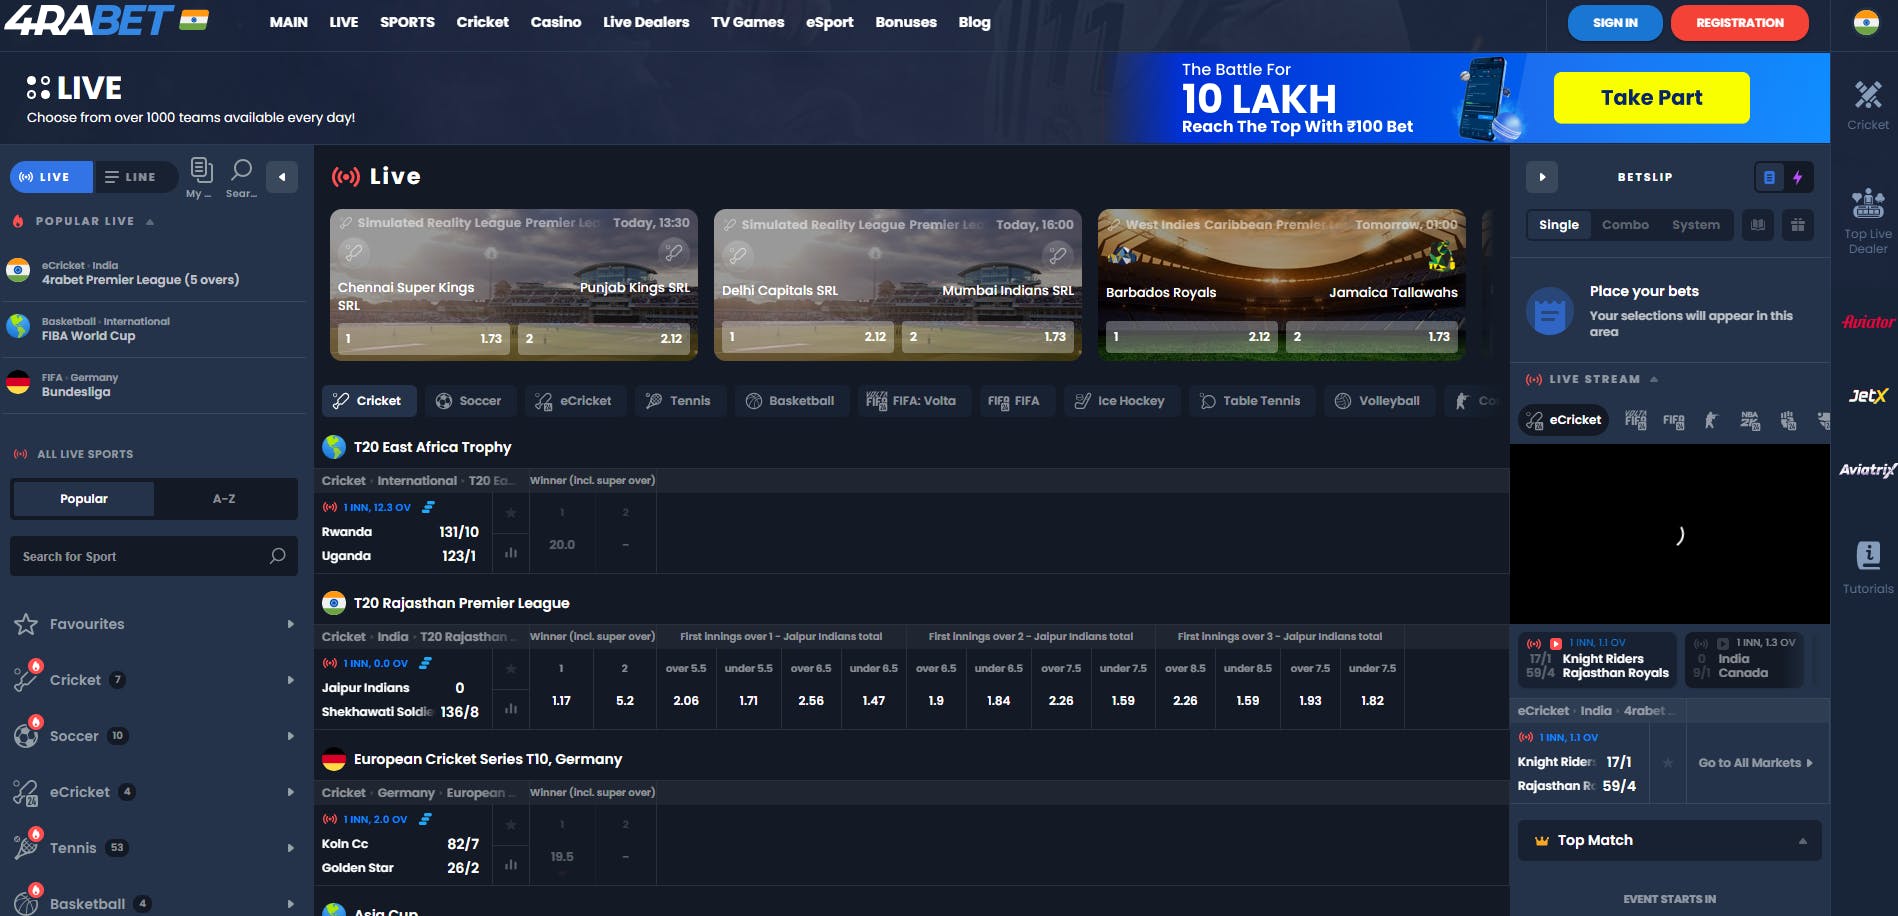 4Rabet india sports betting site